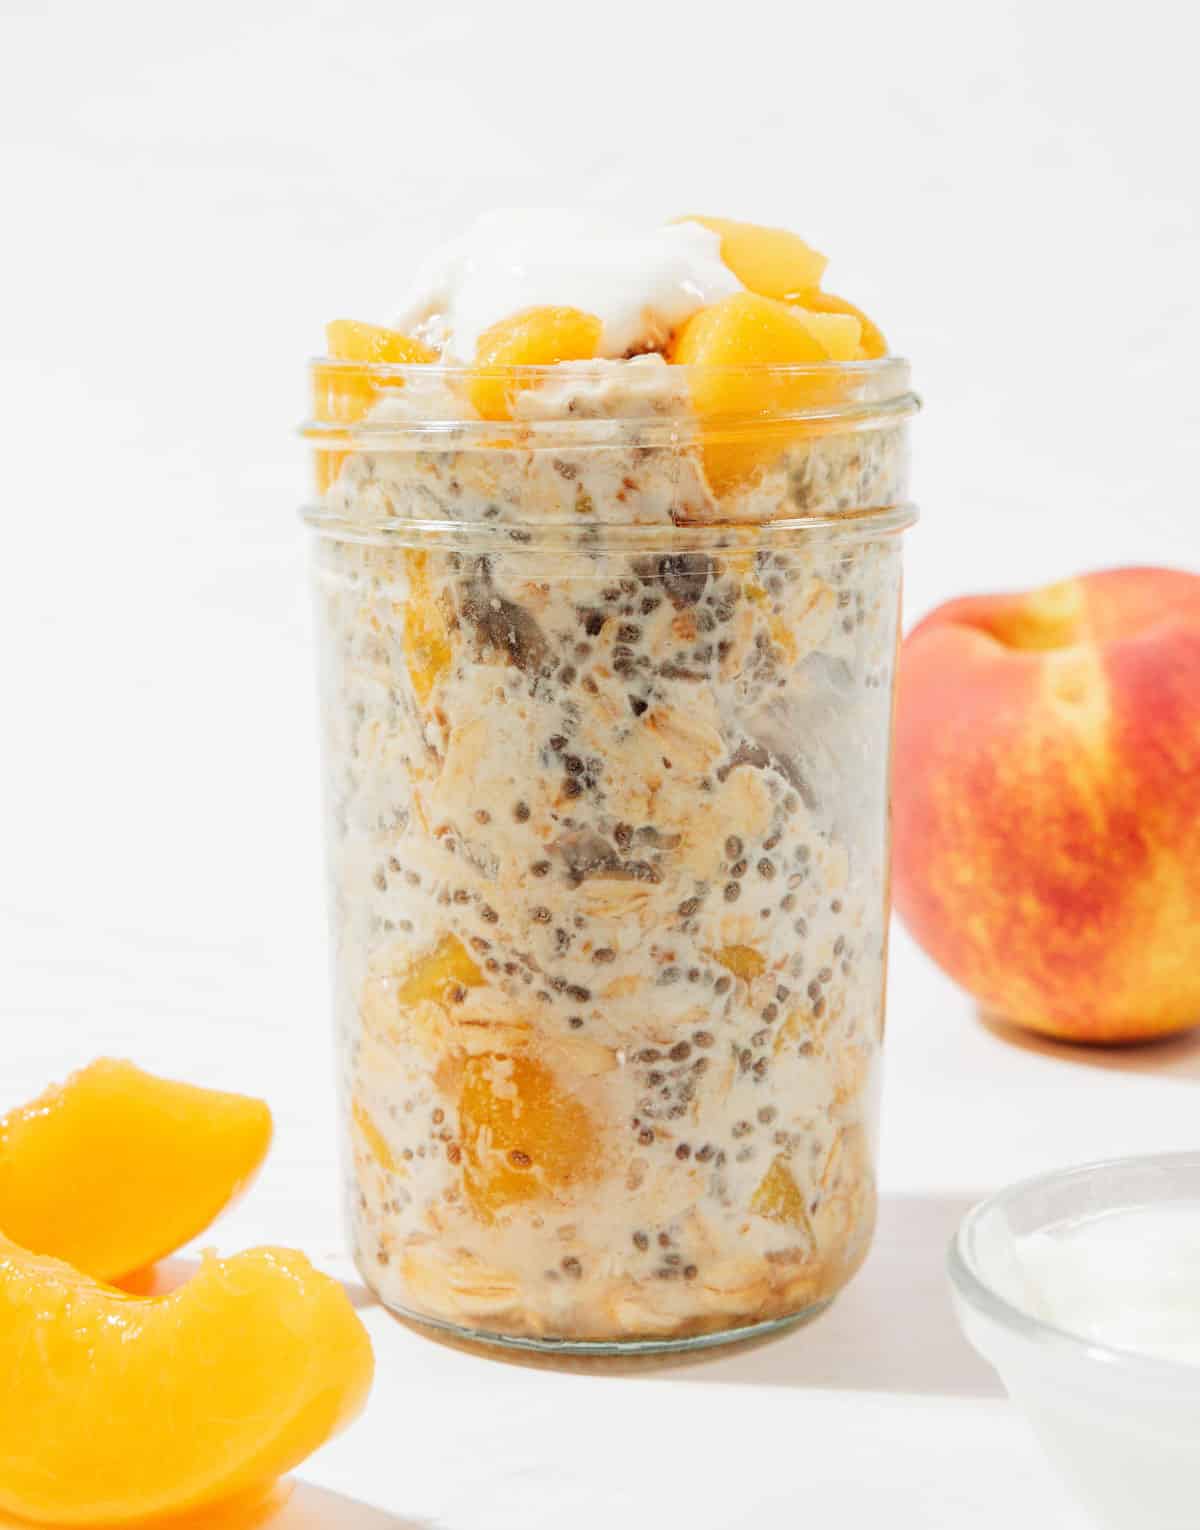 Peach overnight oats in a jar.